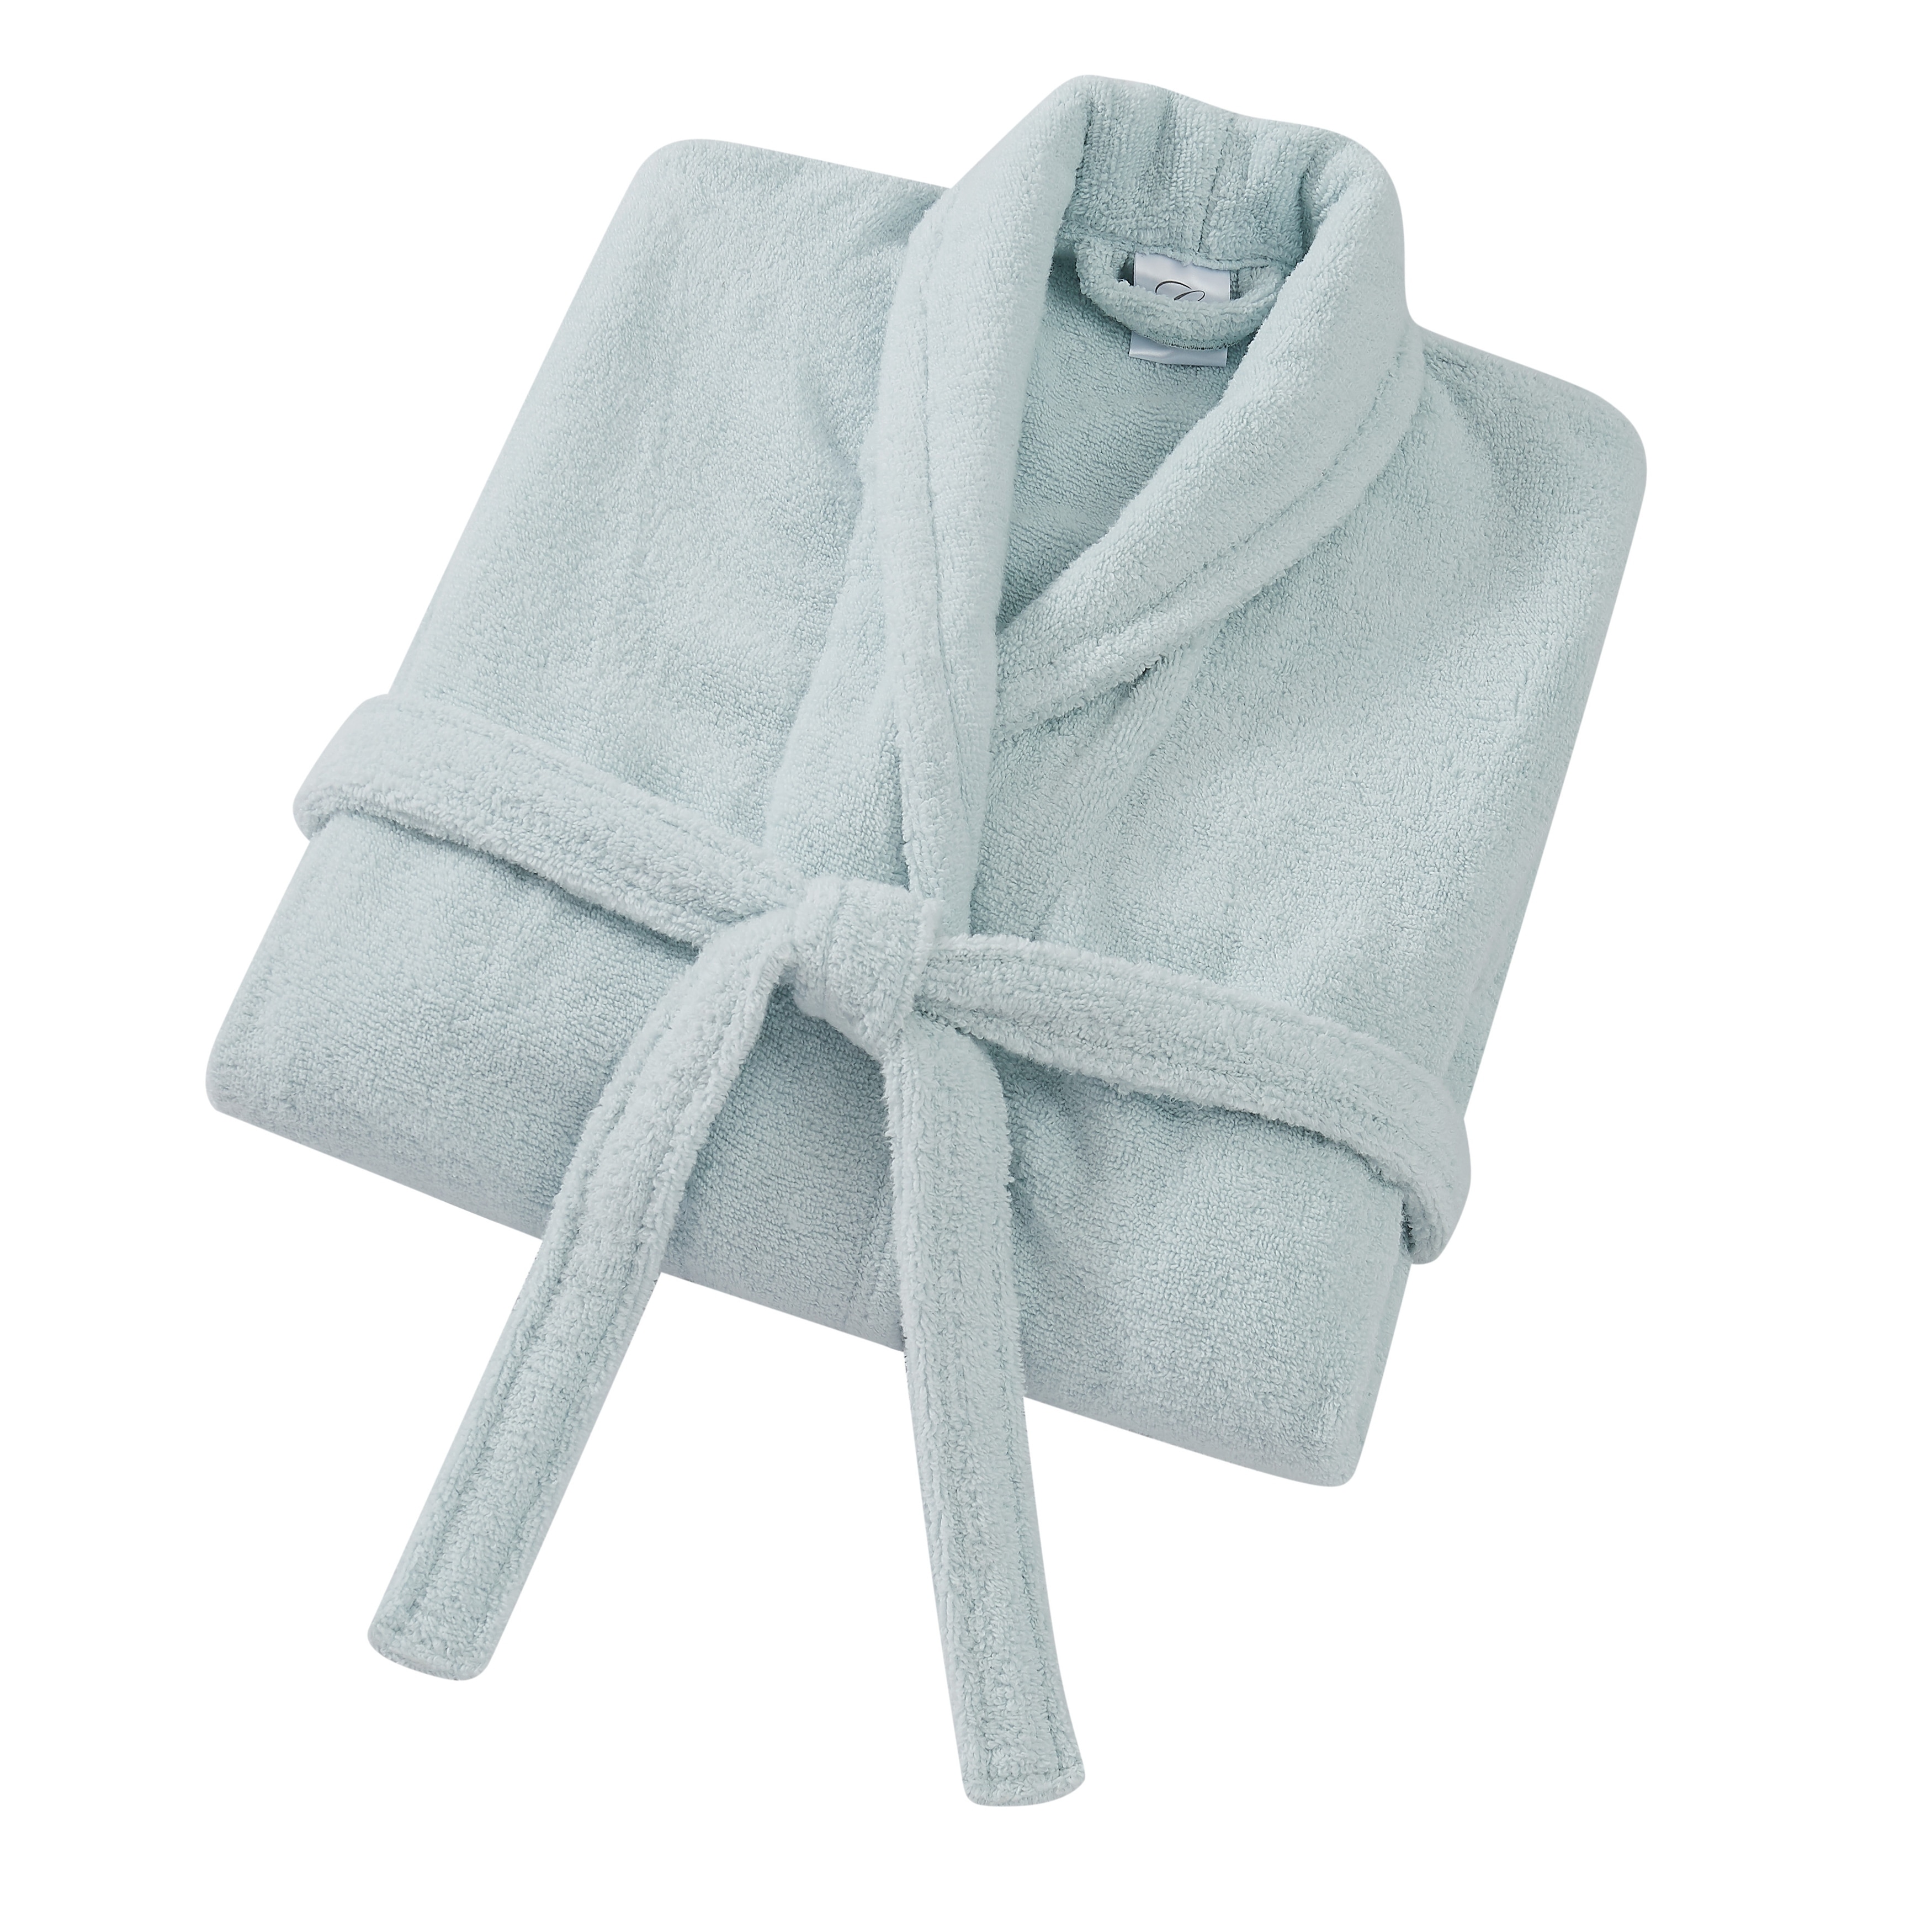 L/XL Luxe Zero Twist Bath Robe Blue - Charisma